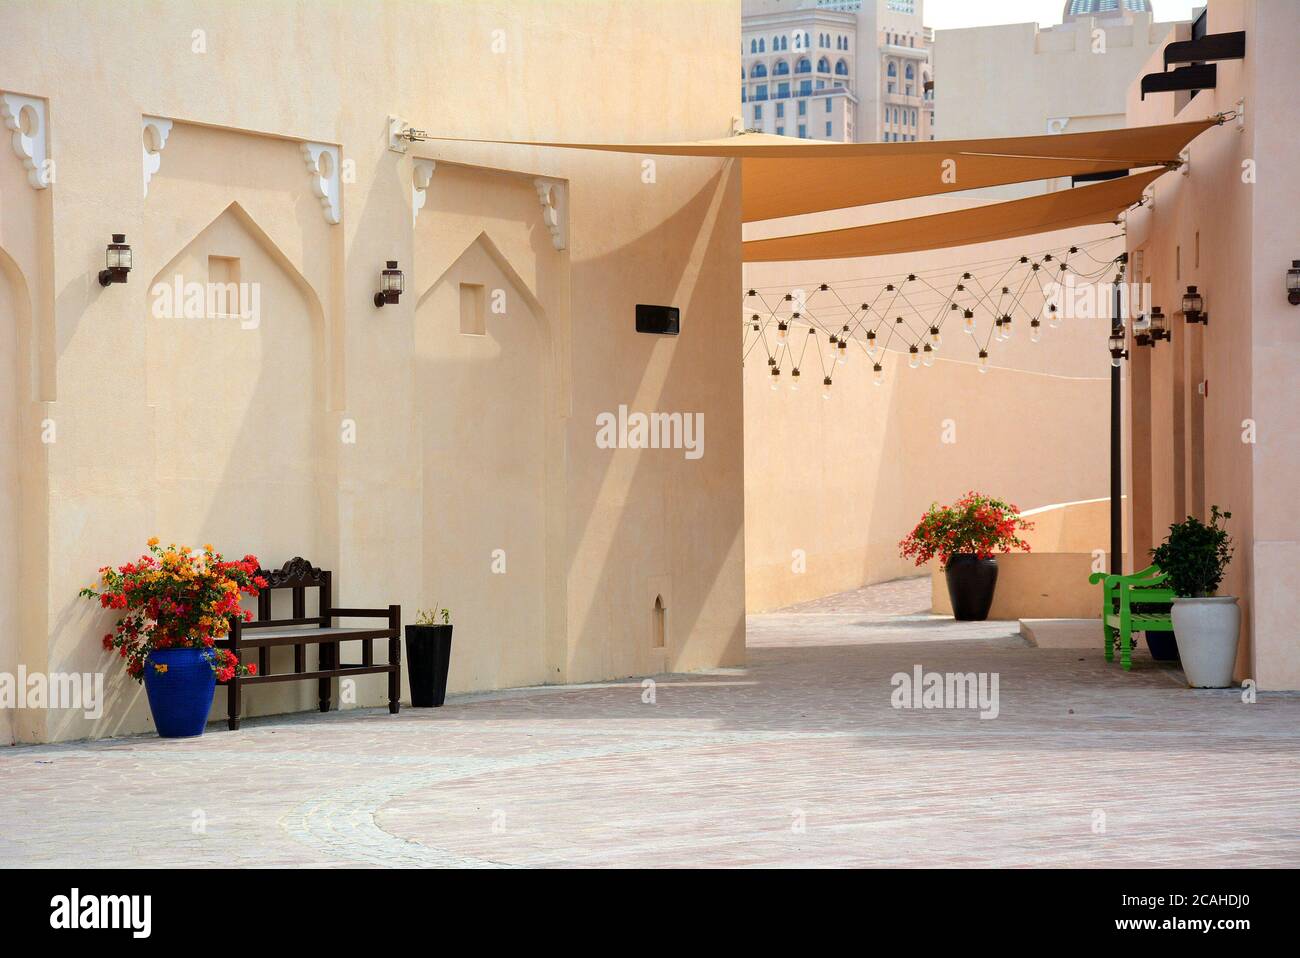 traditional arabic architecture and design Stock Photo